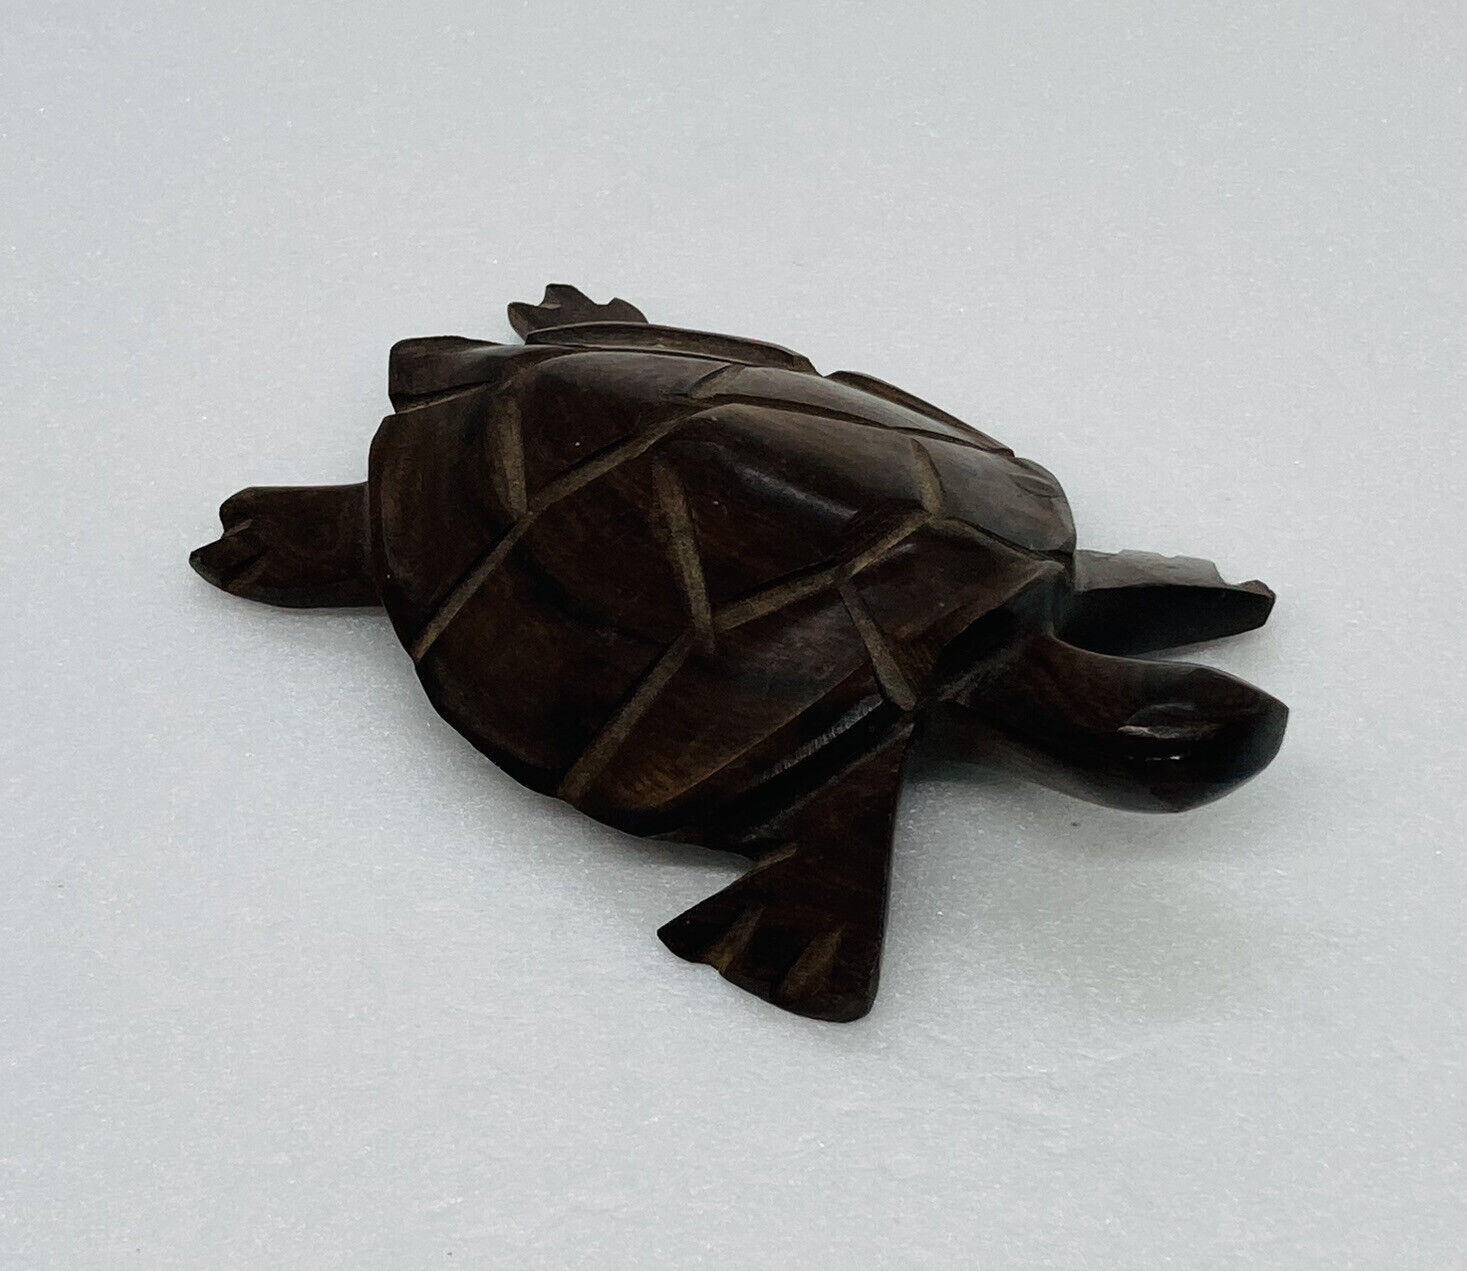 Vintage 1970s Mahogany Wood Carved Turtle Figurine “I Love You” Engraved Art 20